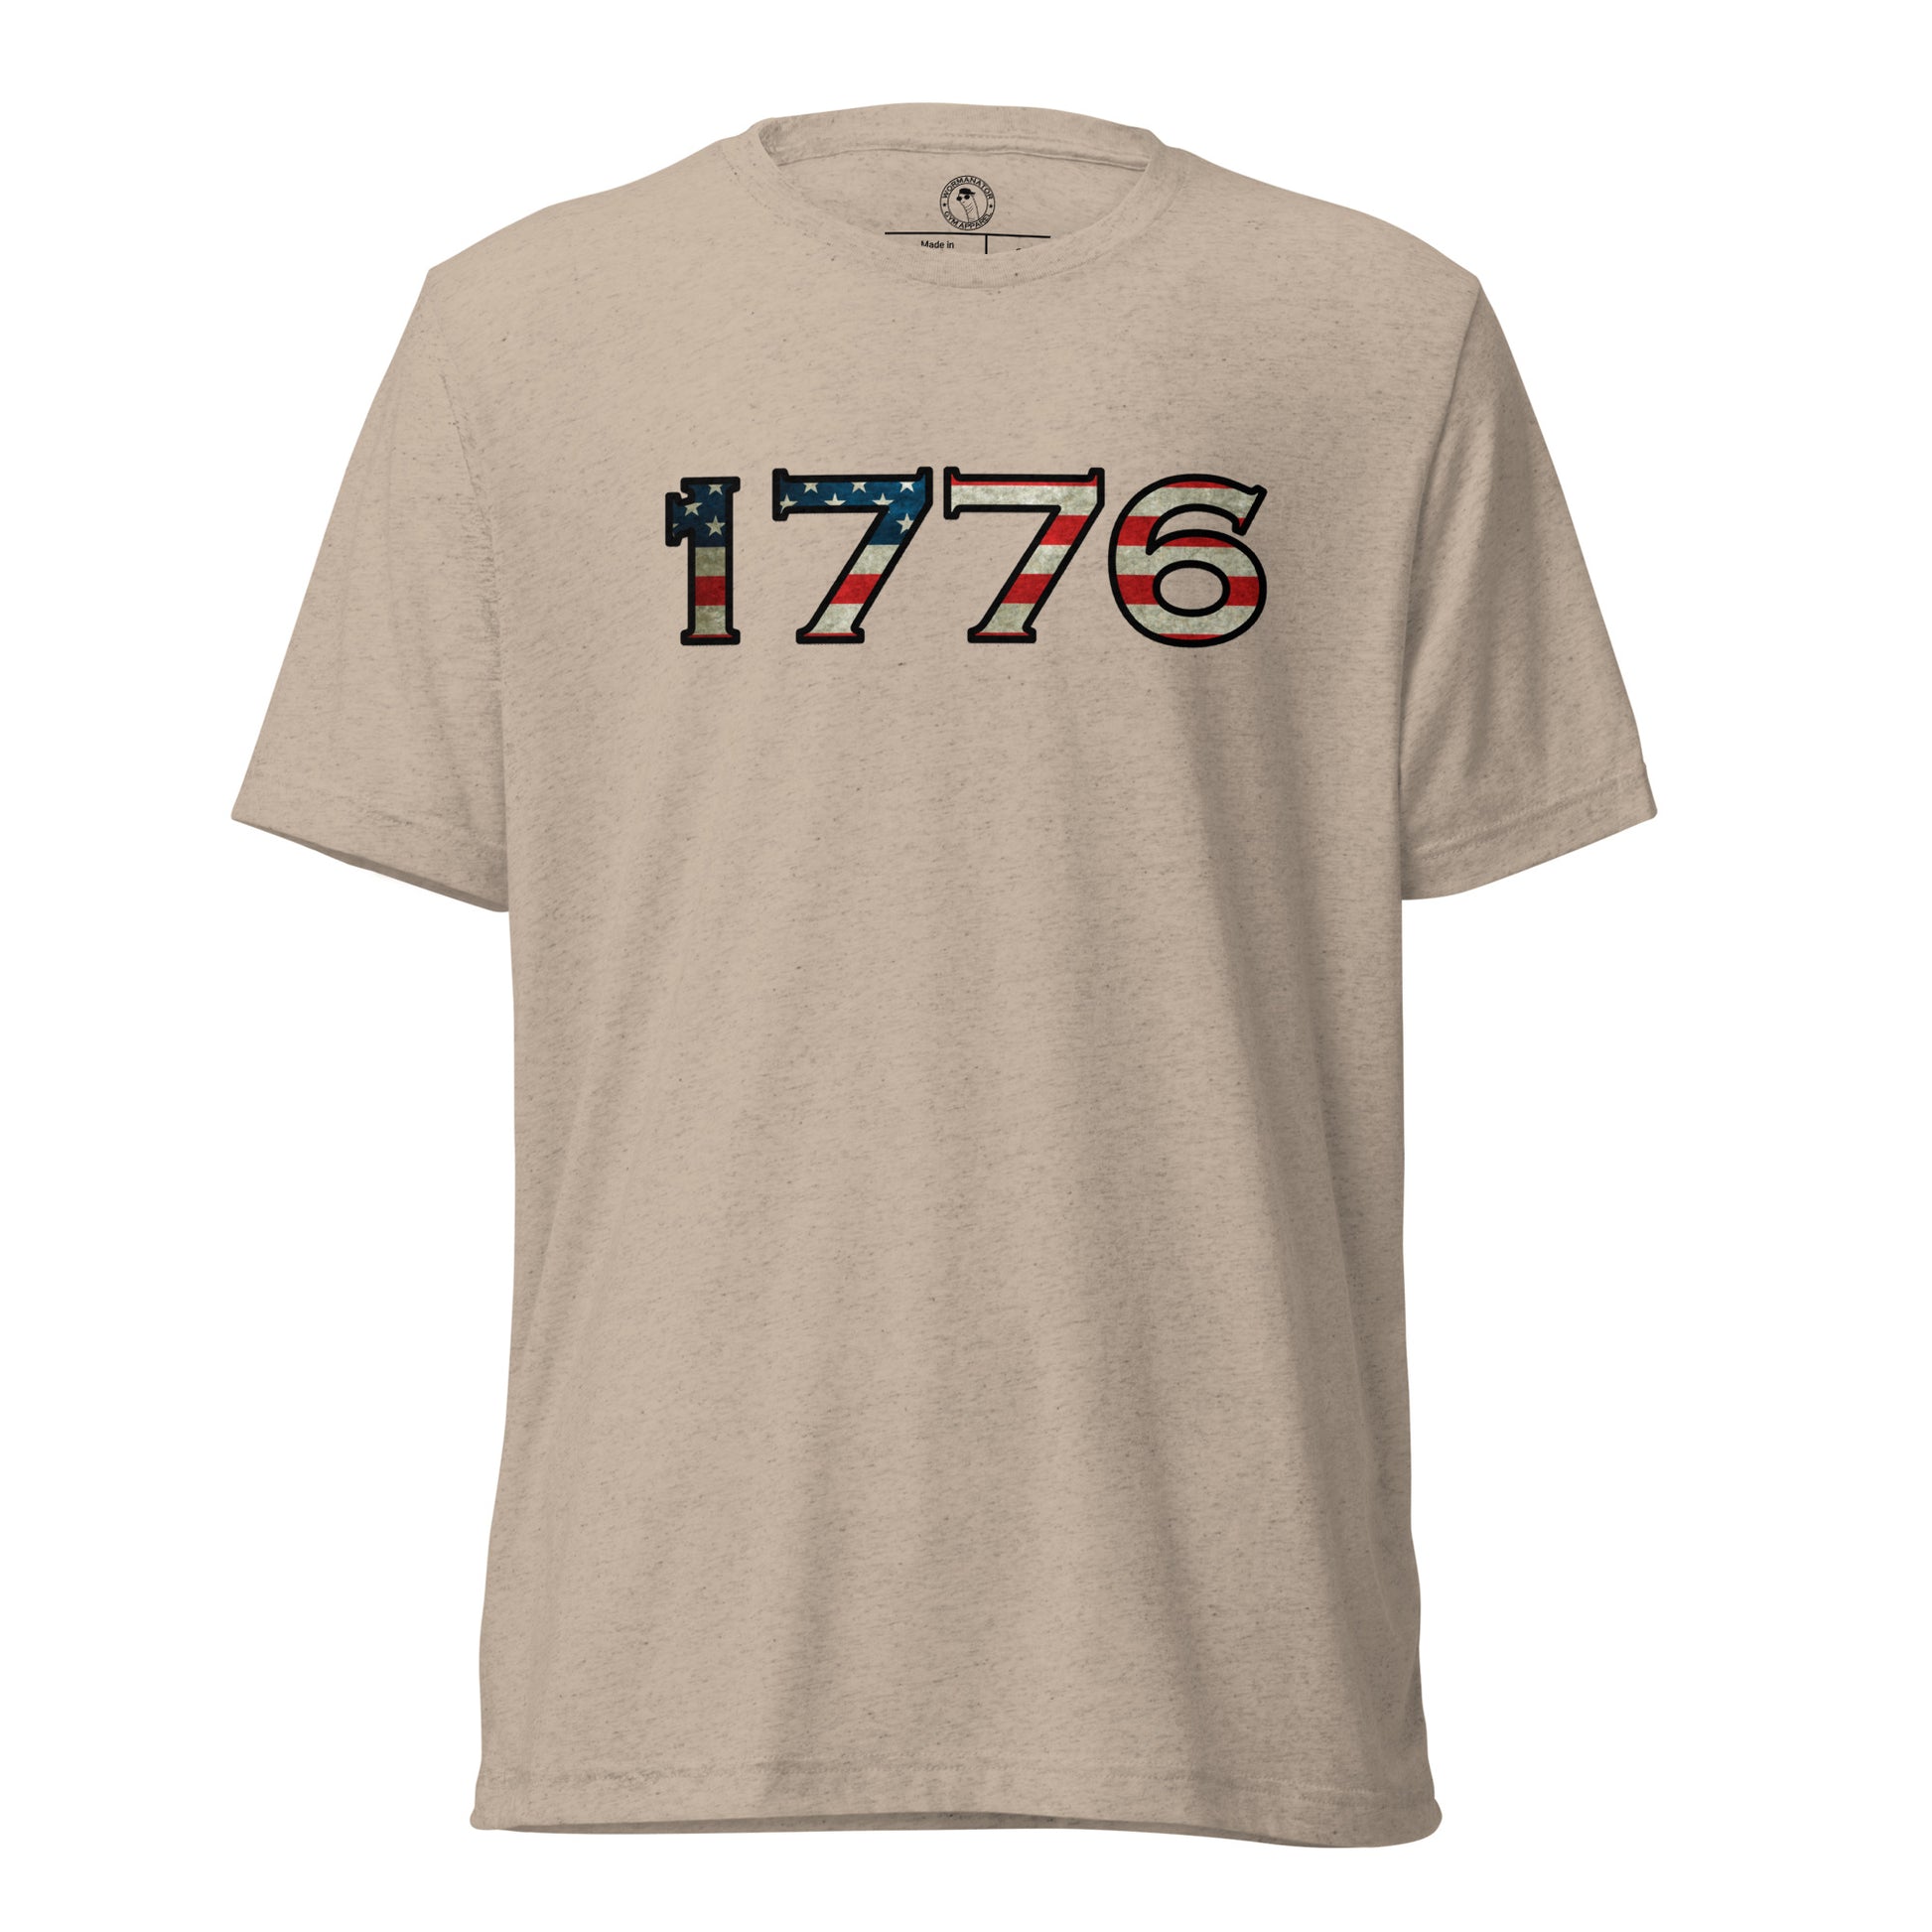 1776 T-Shirt in Tan Triblend